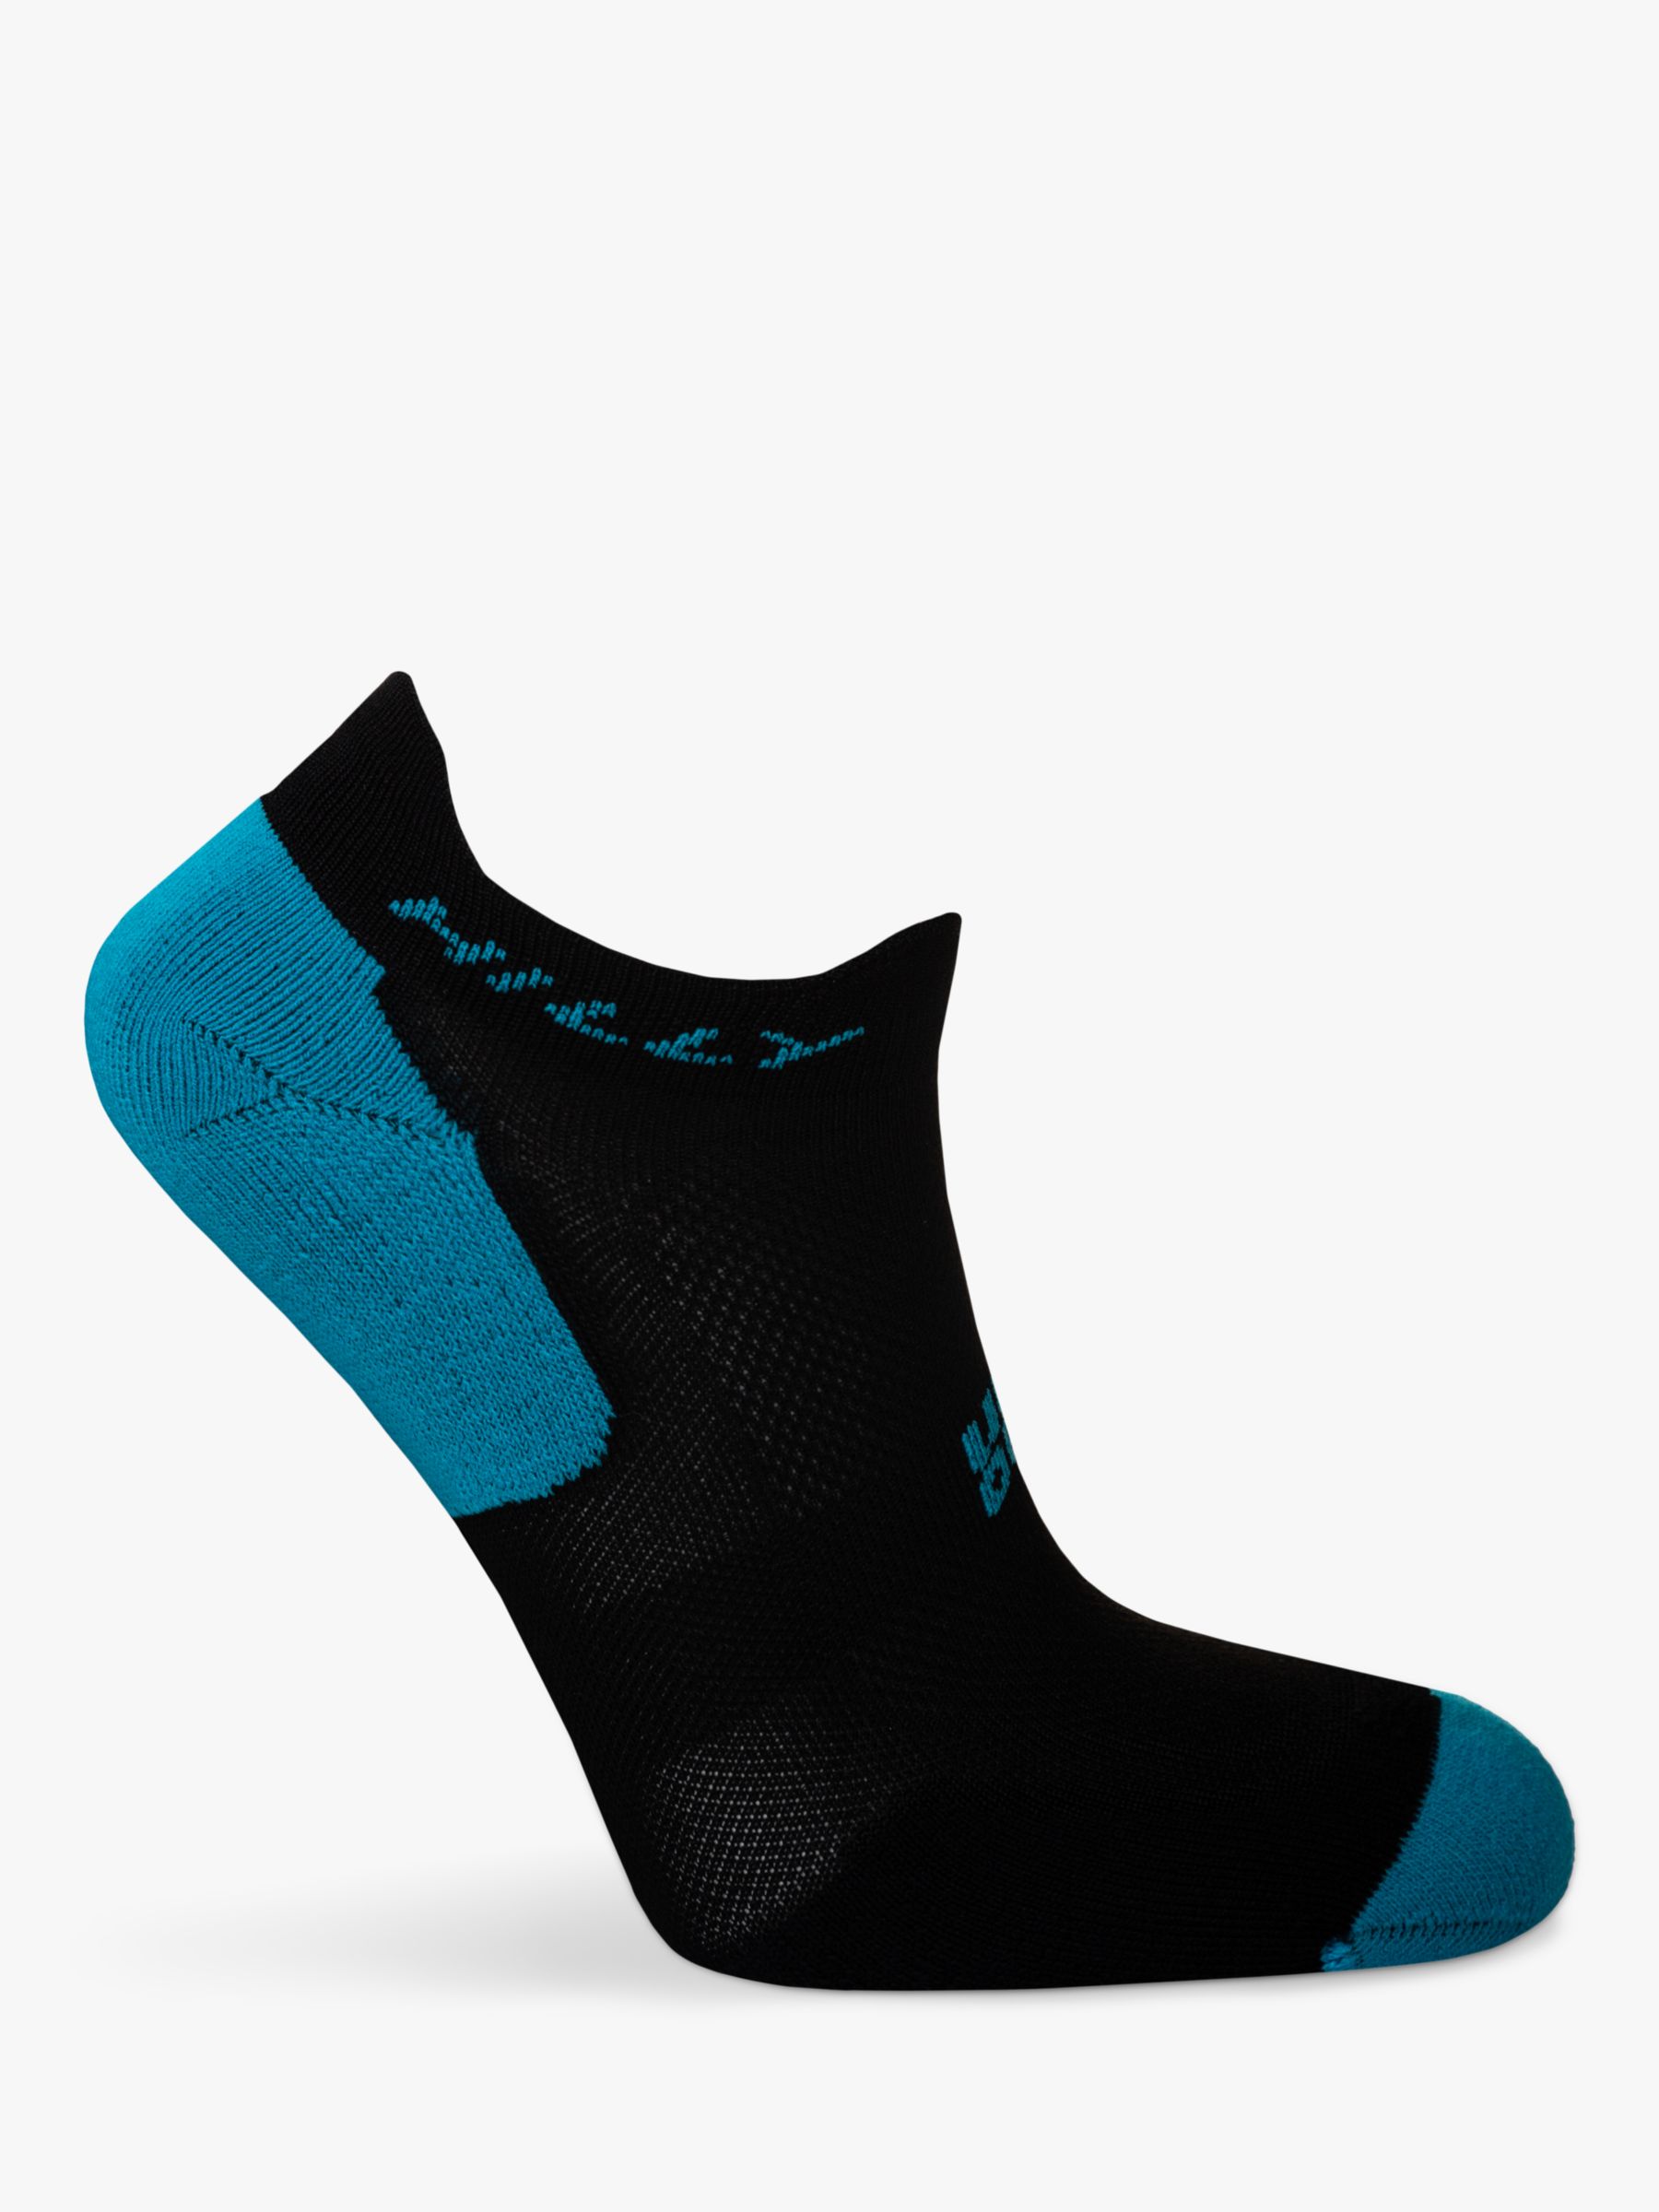 Hilly Active Socklet Min Running Socks, Pack of 2, White/Black/Grey, S